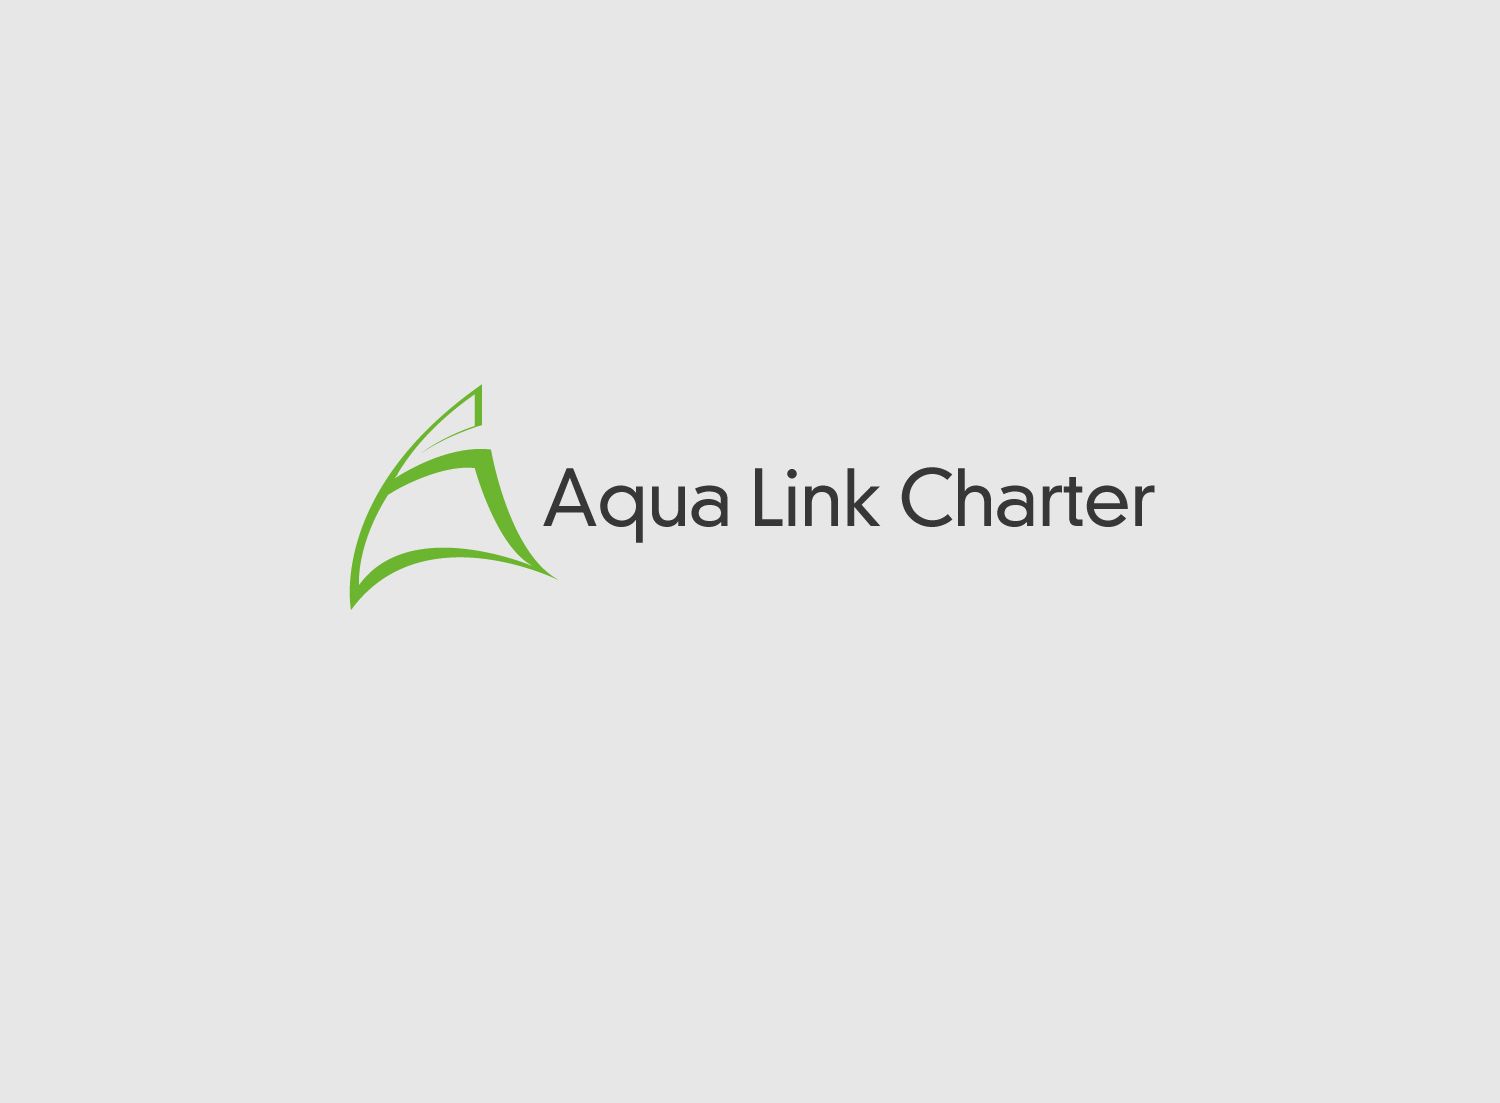 Аренда (чартер) парусных яхт - Aqua Link Charter - дизайнер abstract